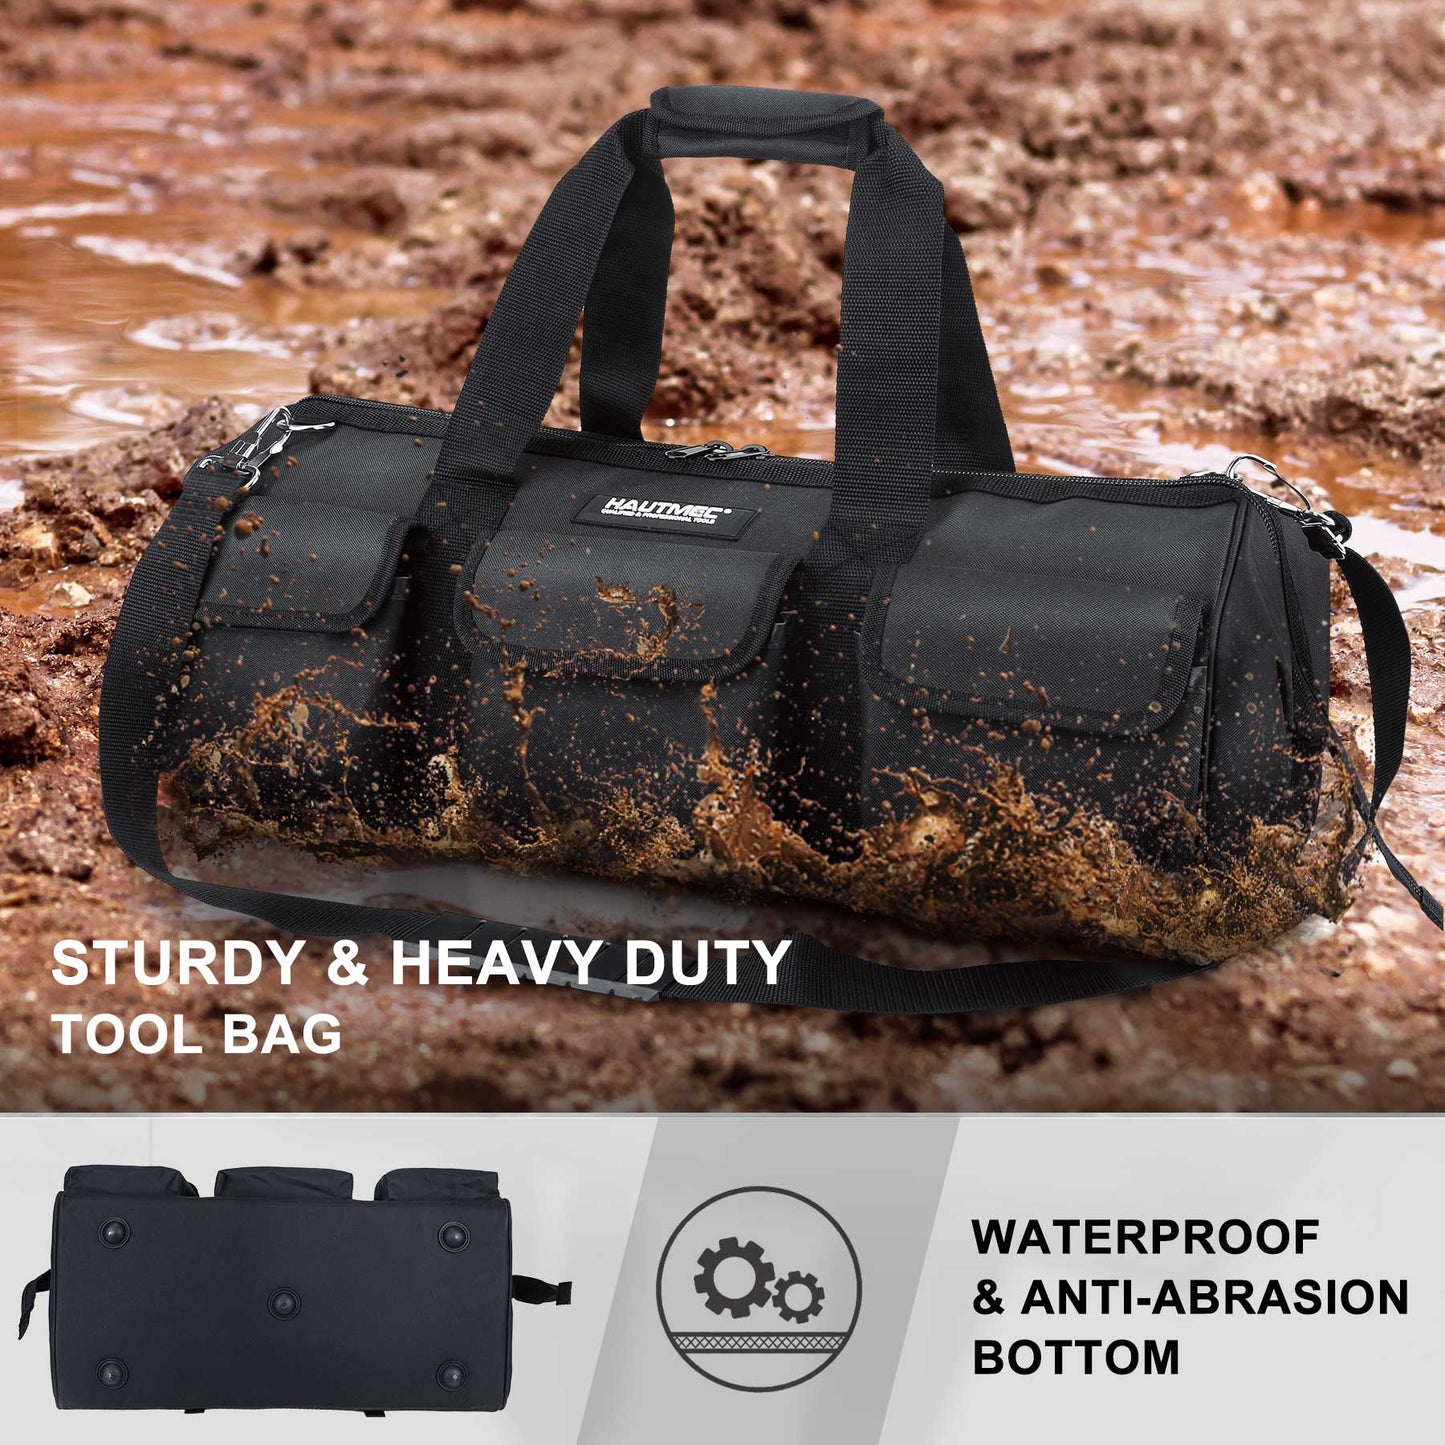 HAUTMEC 24" Contractor Heavy Duty Tool Bag, All Black HT0184-TB